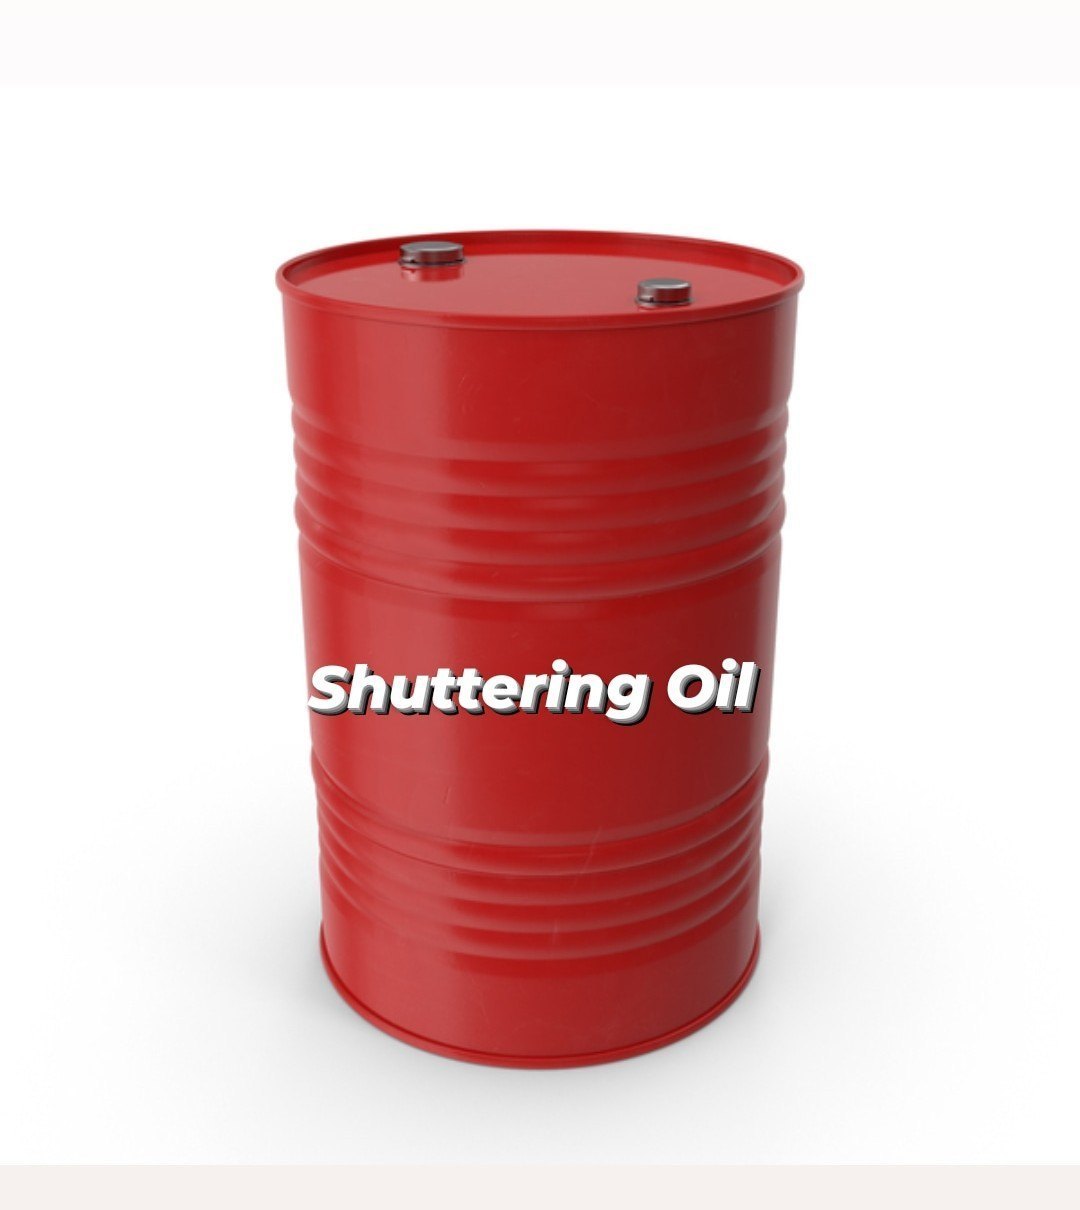 Shuttering Oil Importers